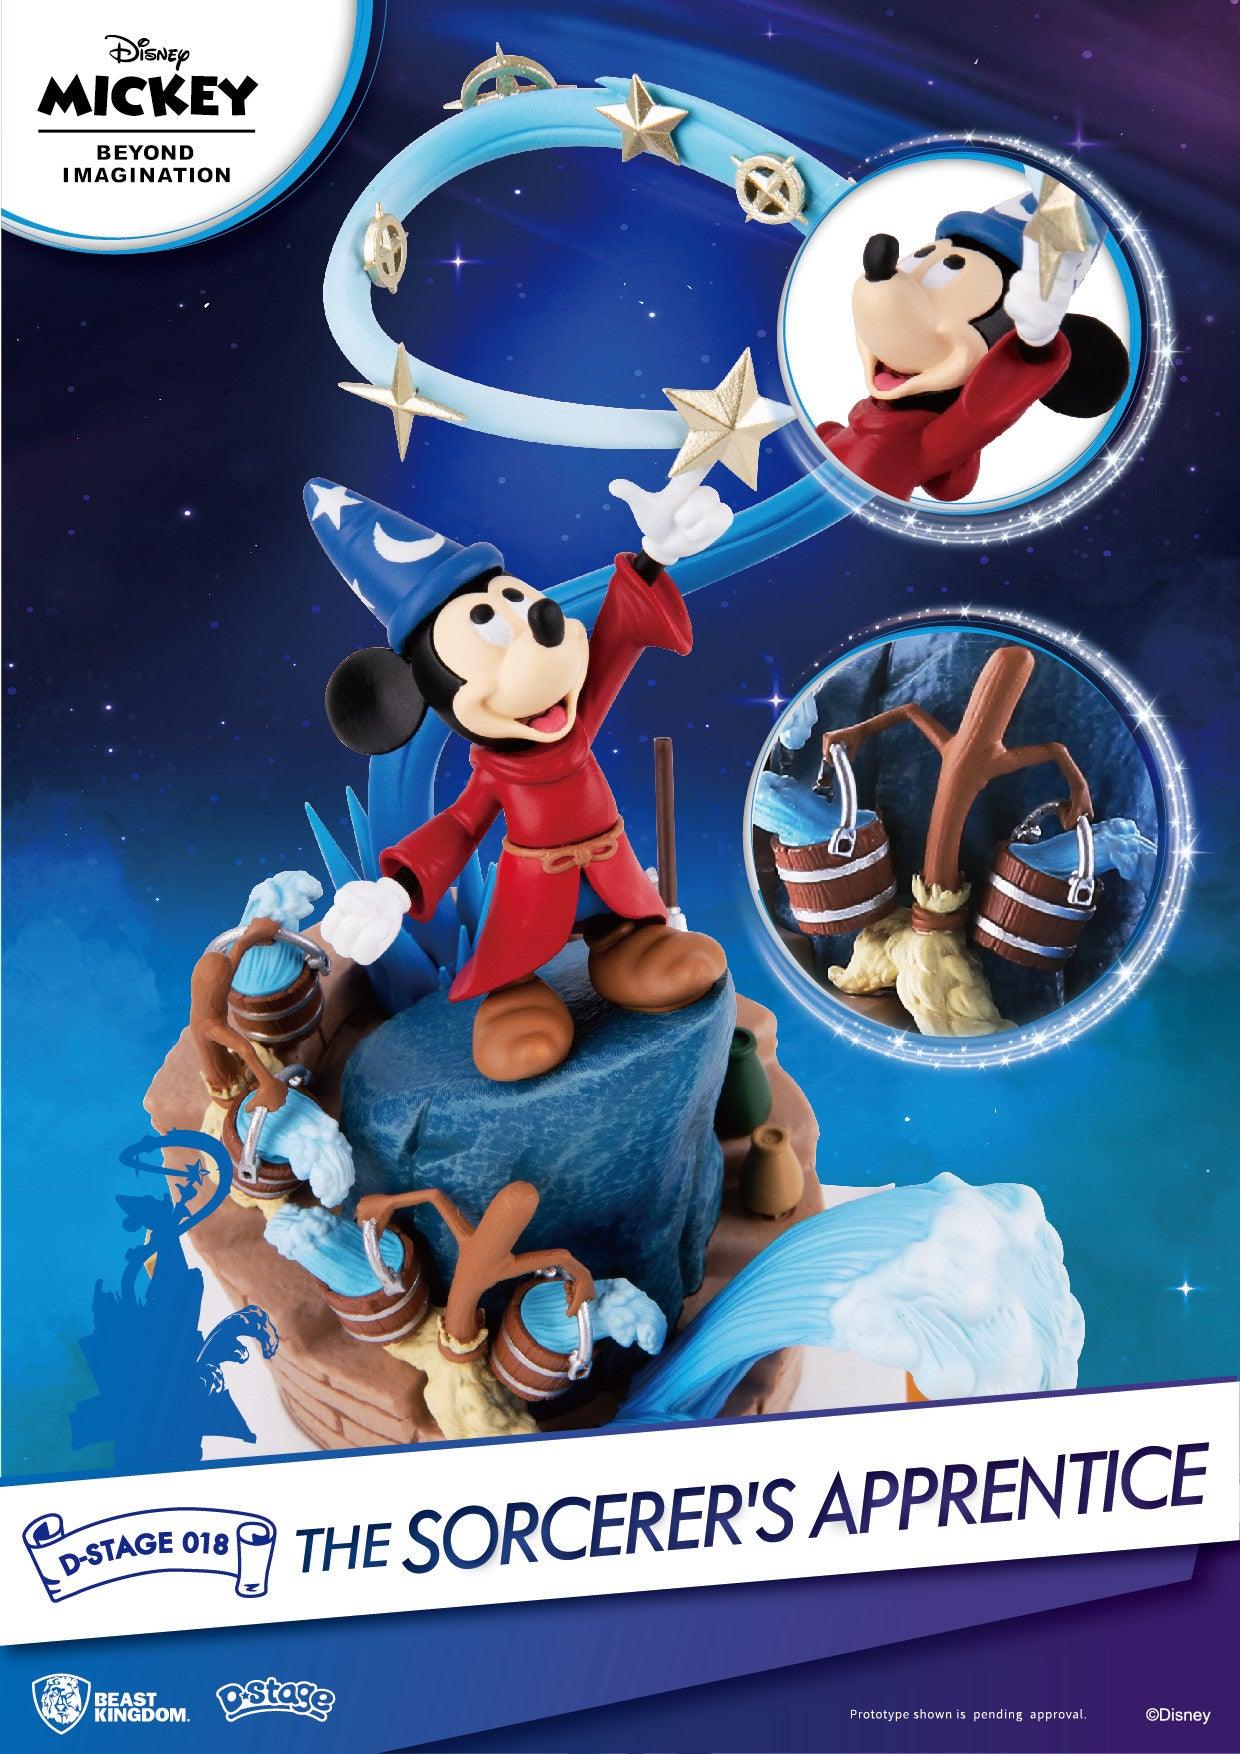 VR-73745 Beast Kingdom D Stage The Sorcerers Apprentice Mickey Mouse - Beast Kingdom - Titan Pop Culture